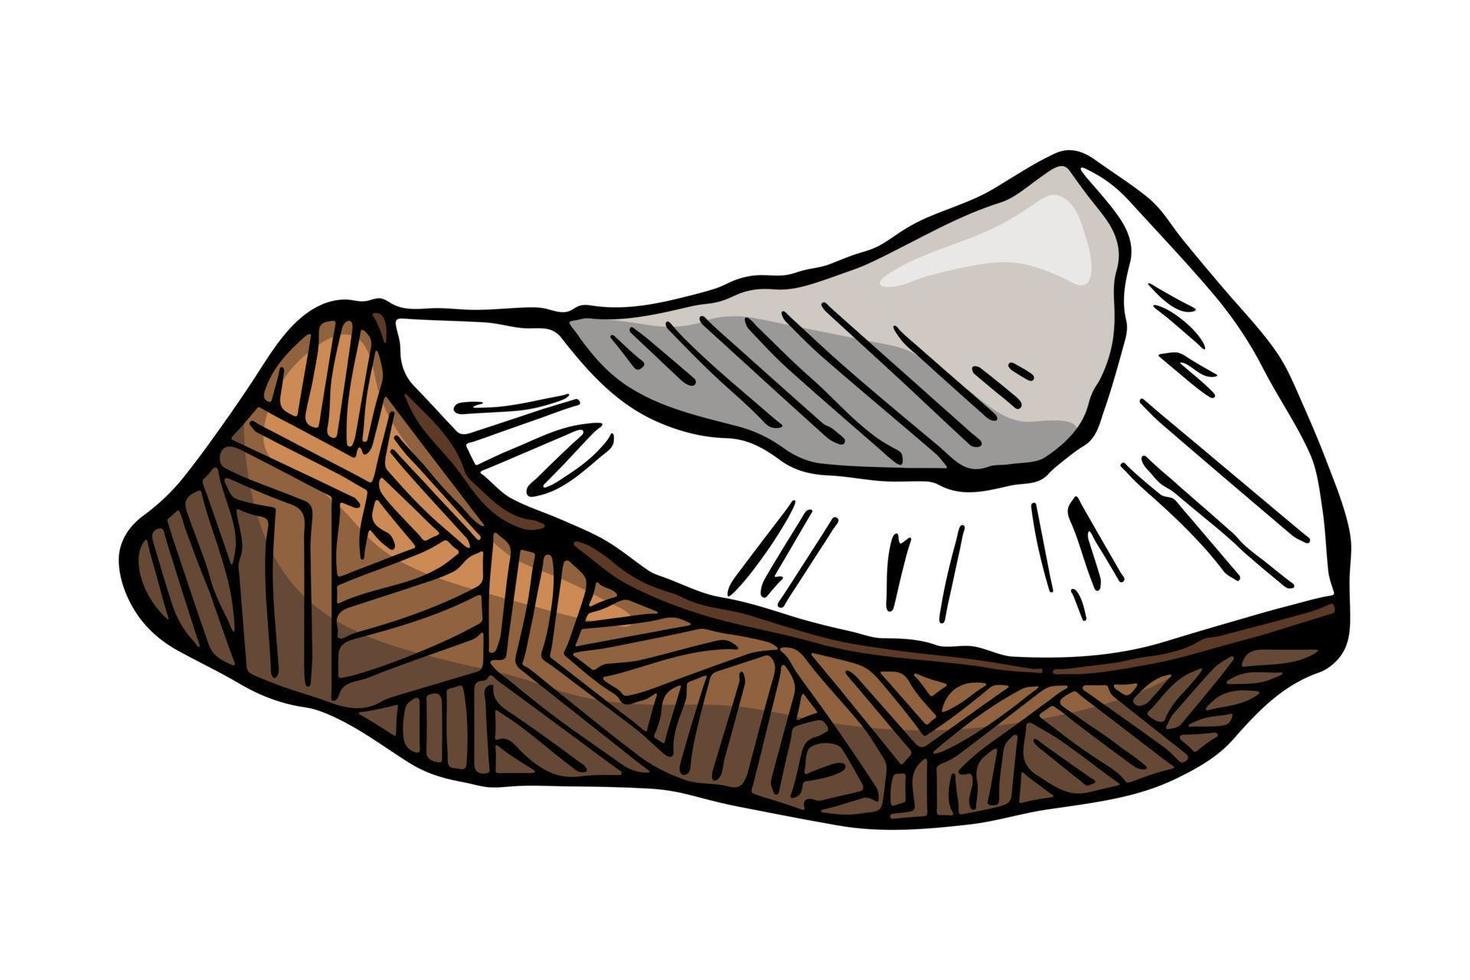 Coconut cliparts. Hand drawn nut icon. Tropical illustration. For print, web, design, decor vector